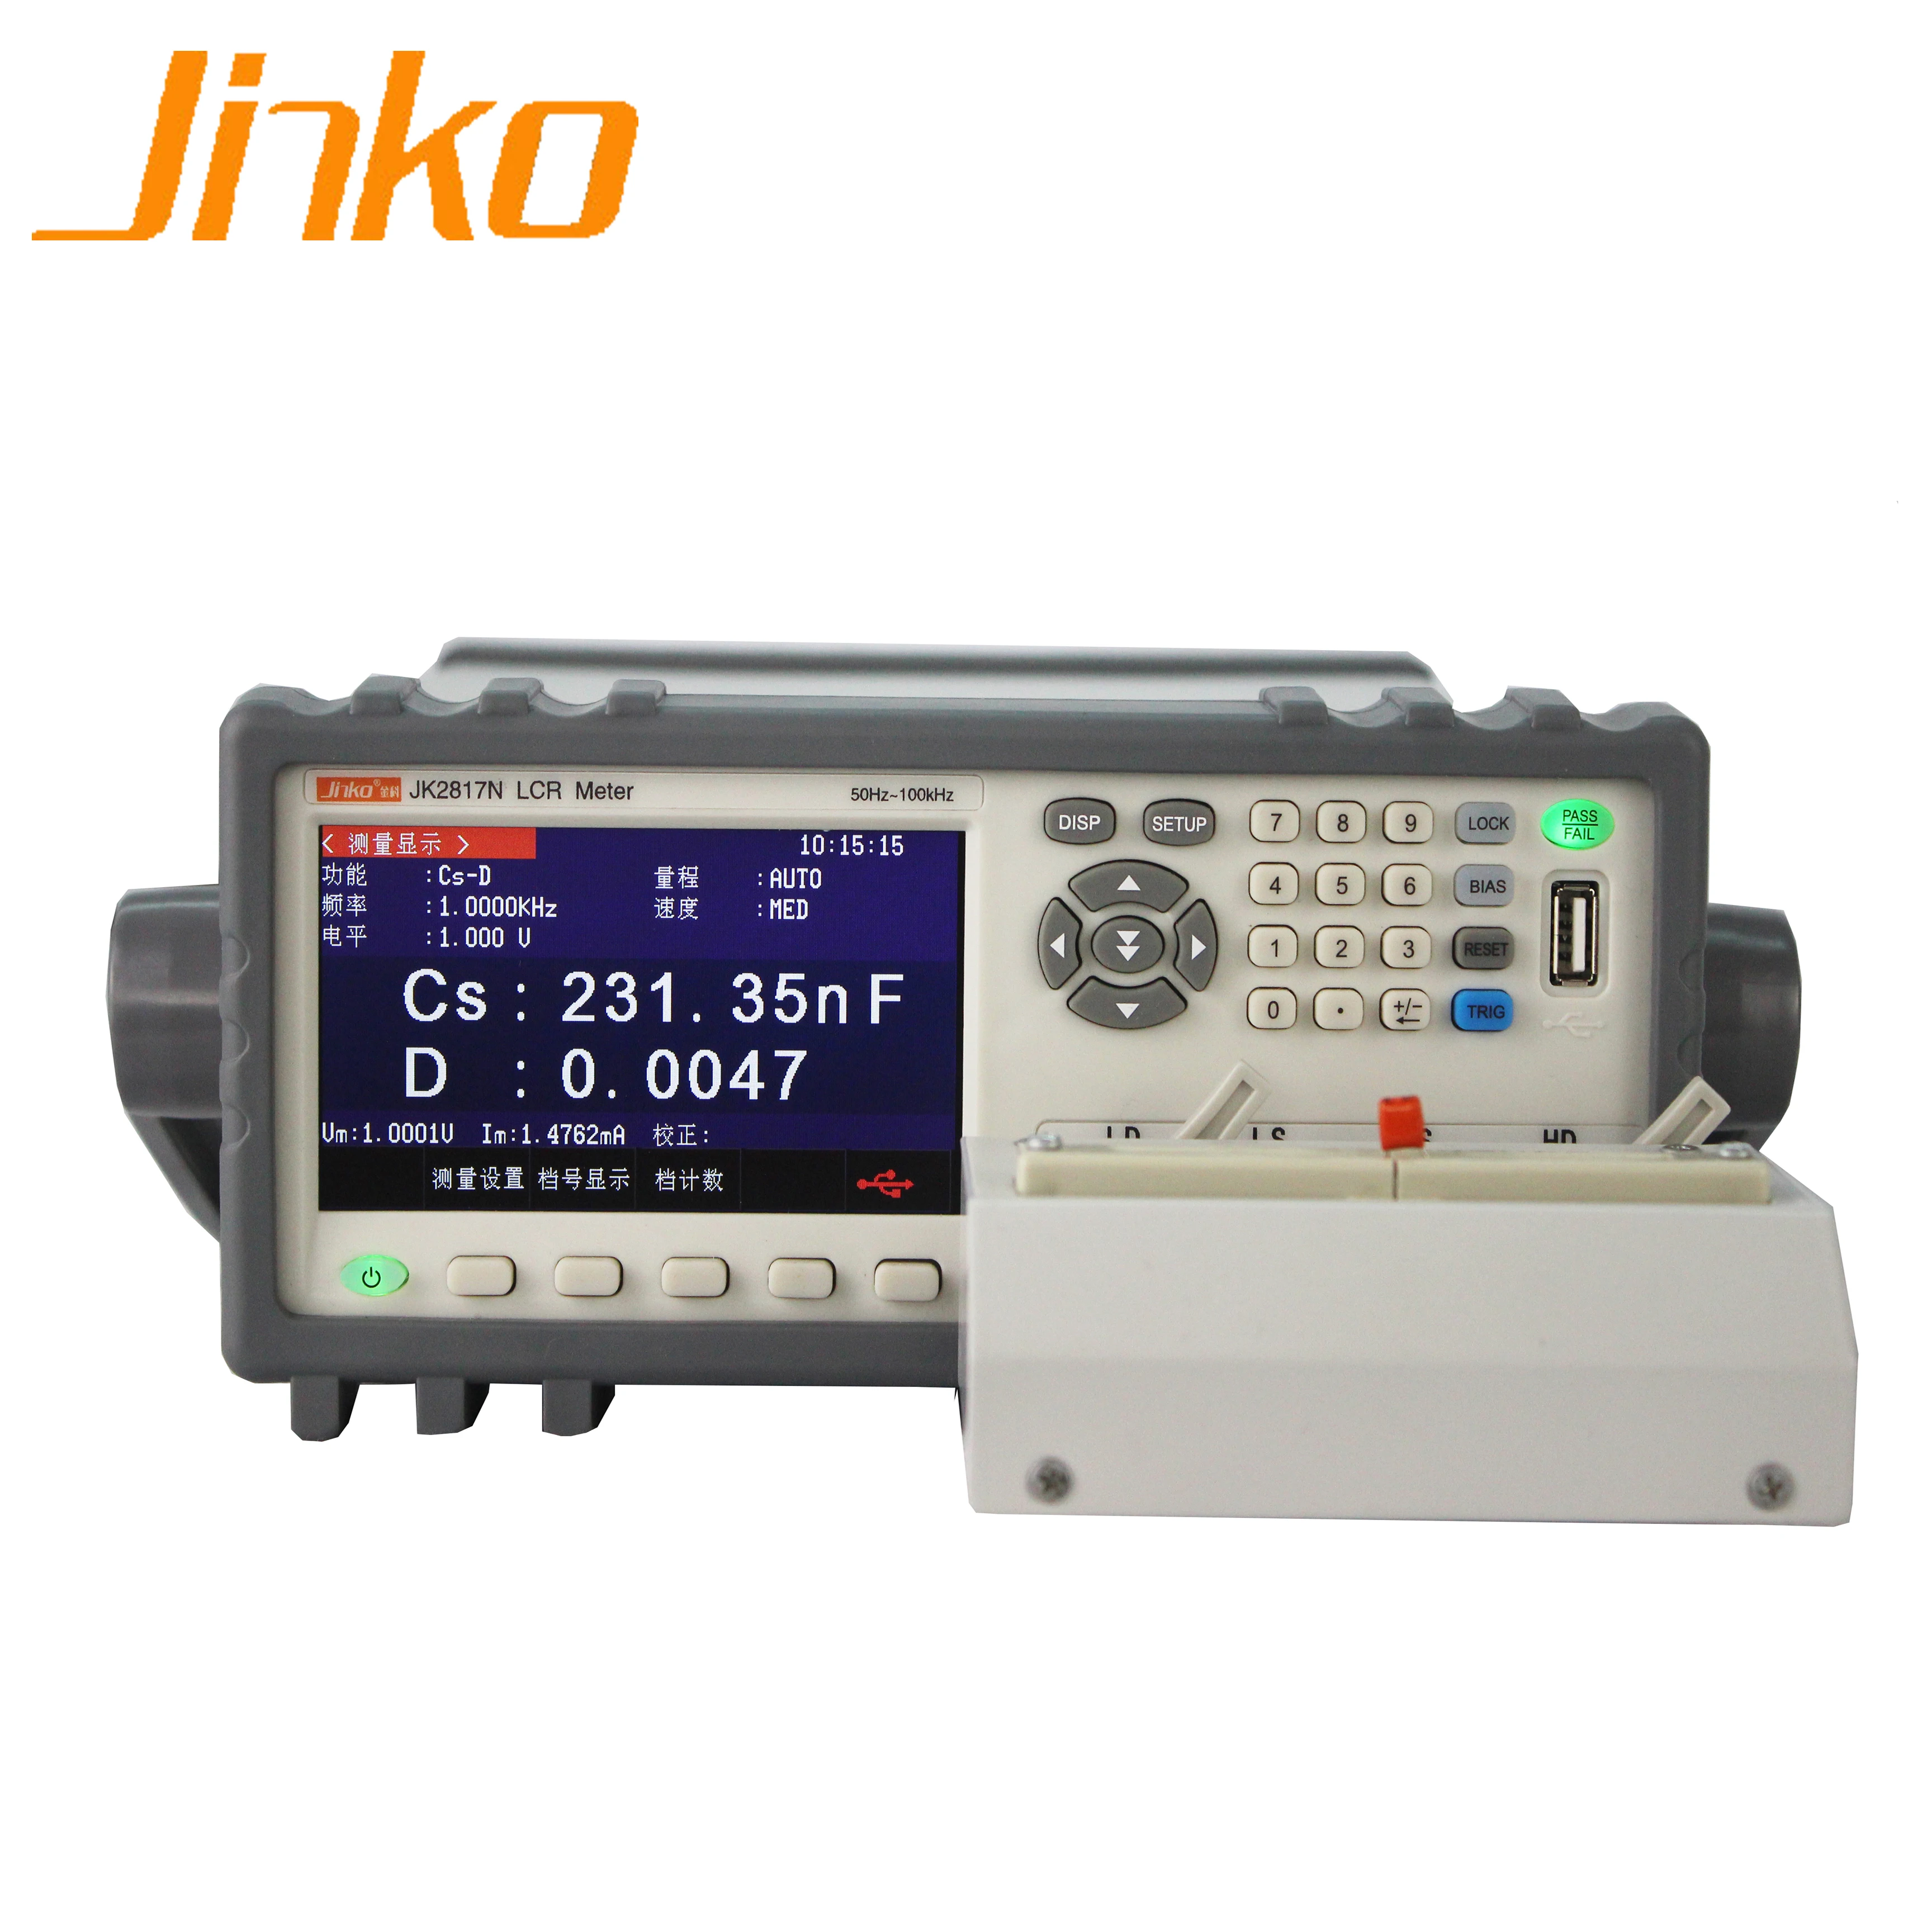 

very hot sales New Precision digital lcr meter 100khz rlc meter JK2817N digital LCR Meter with 0.1% test accuracy